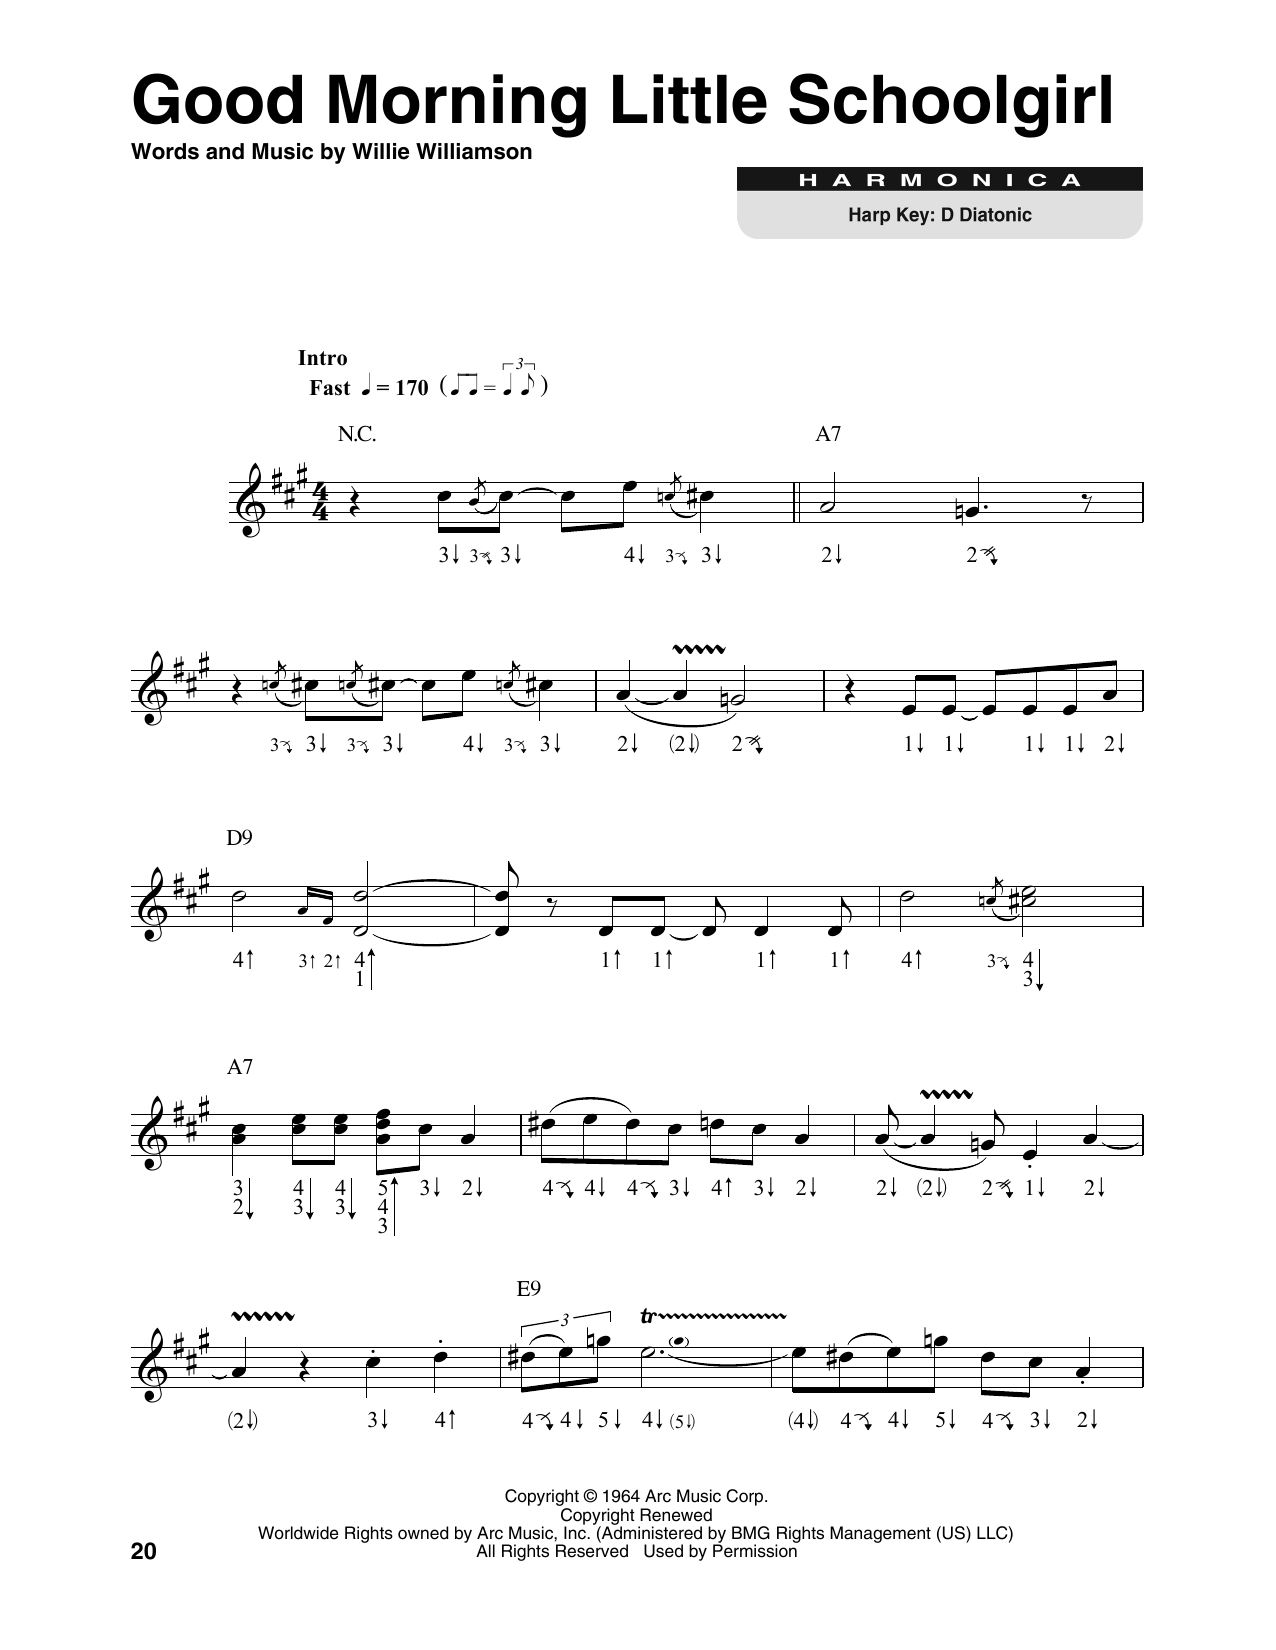 Muddy Waters Good Morning Little Schoolgirl sheet music notes printable PDF score